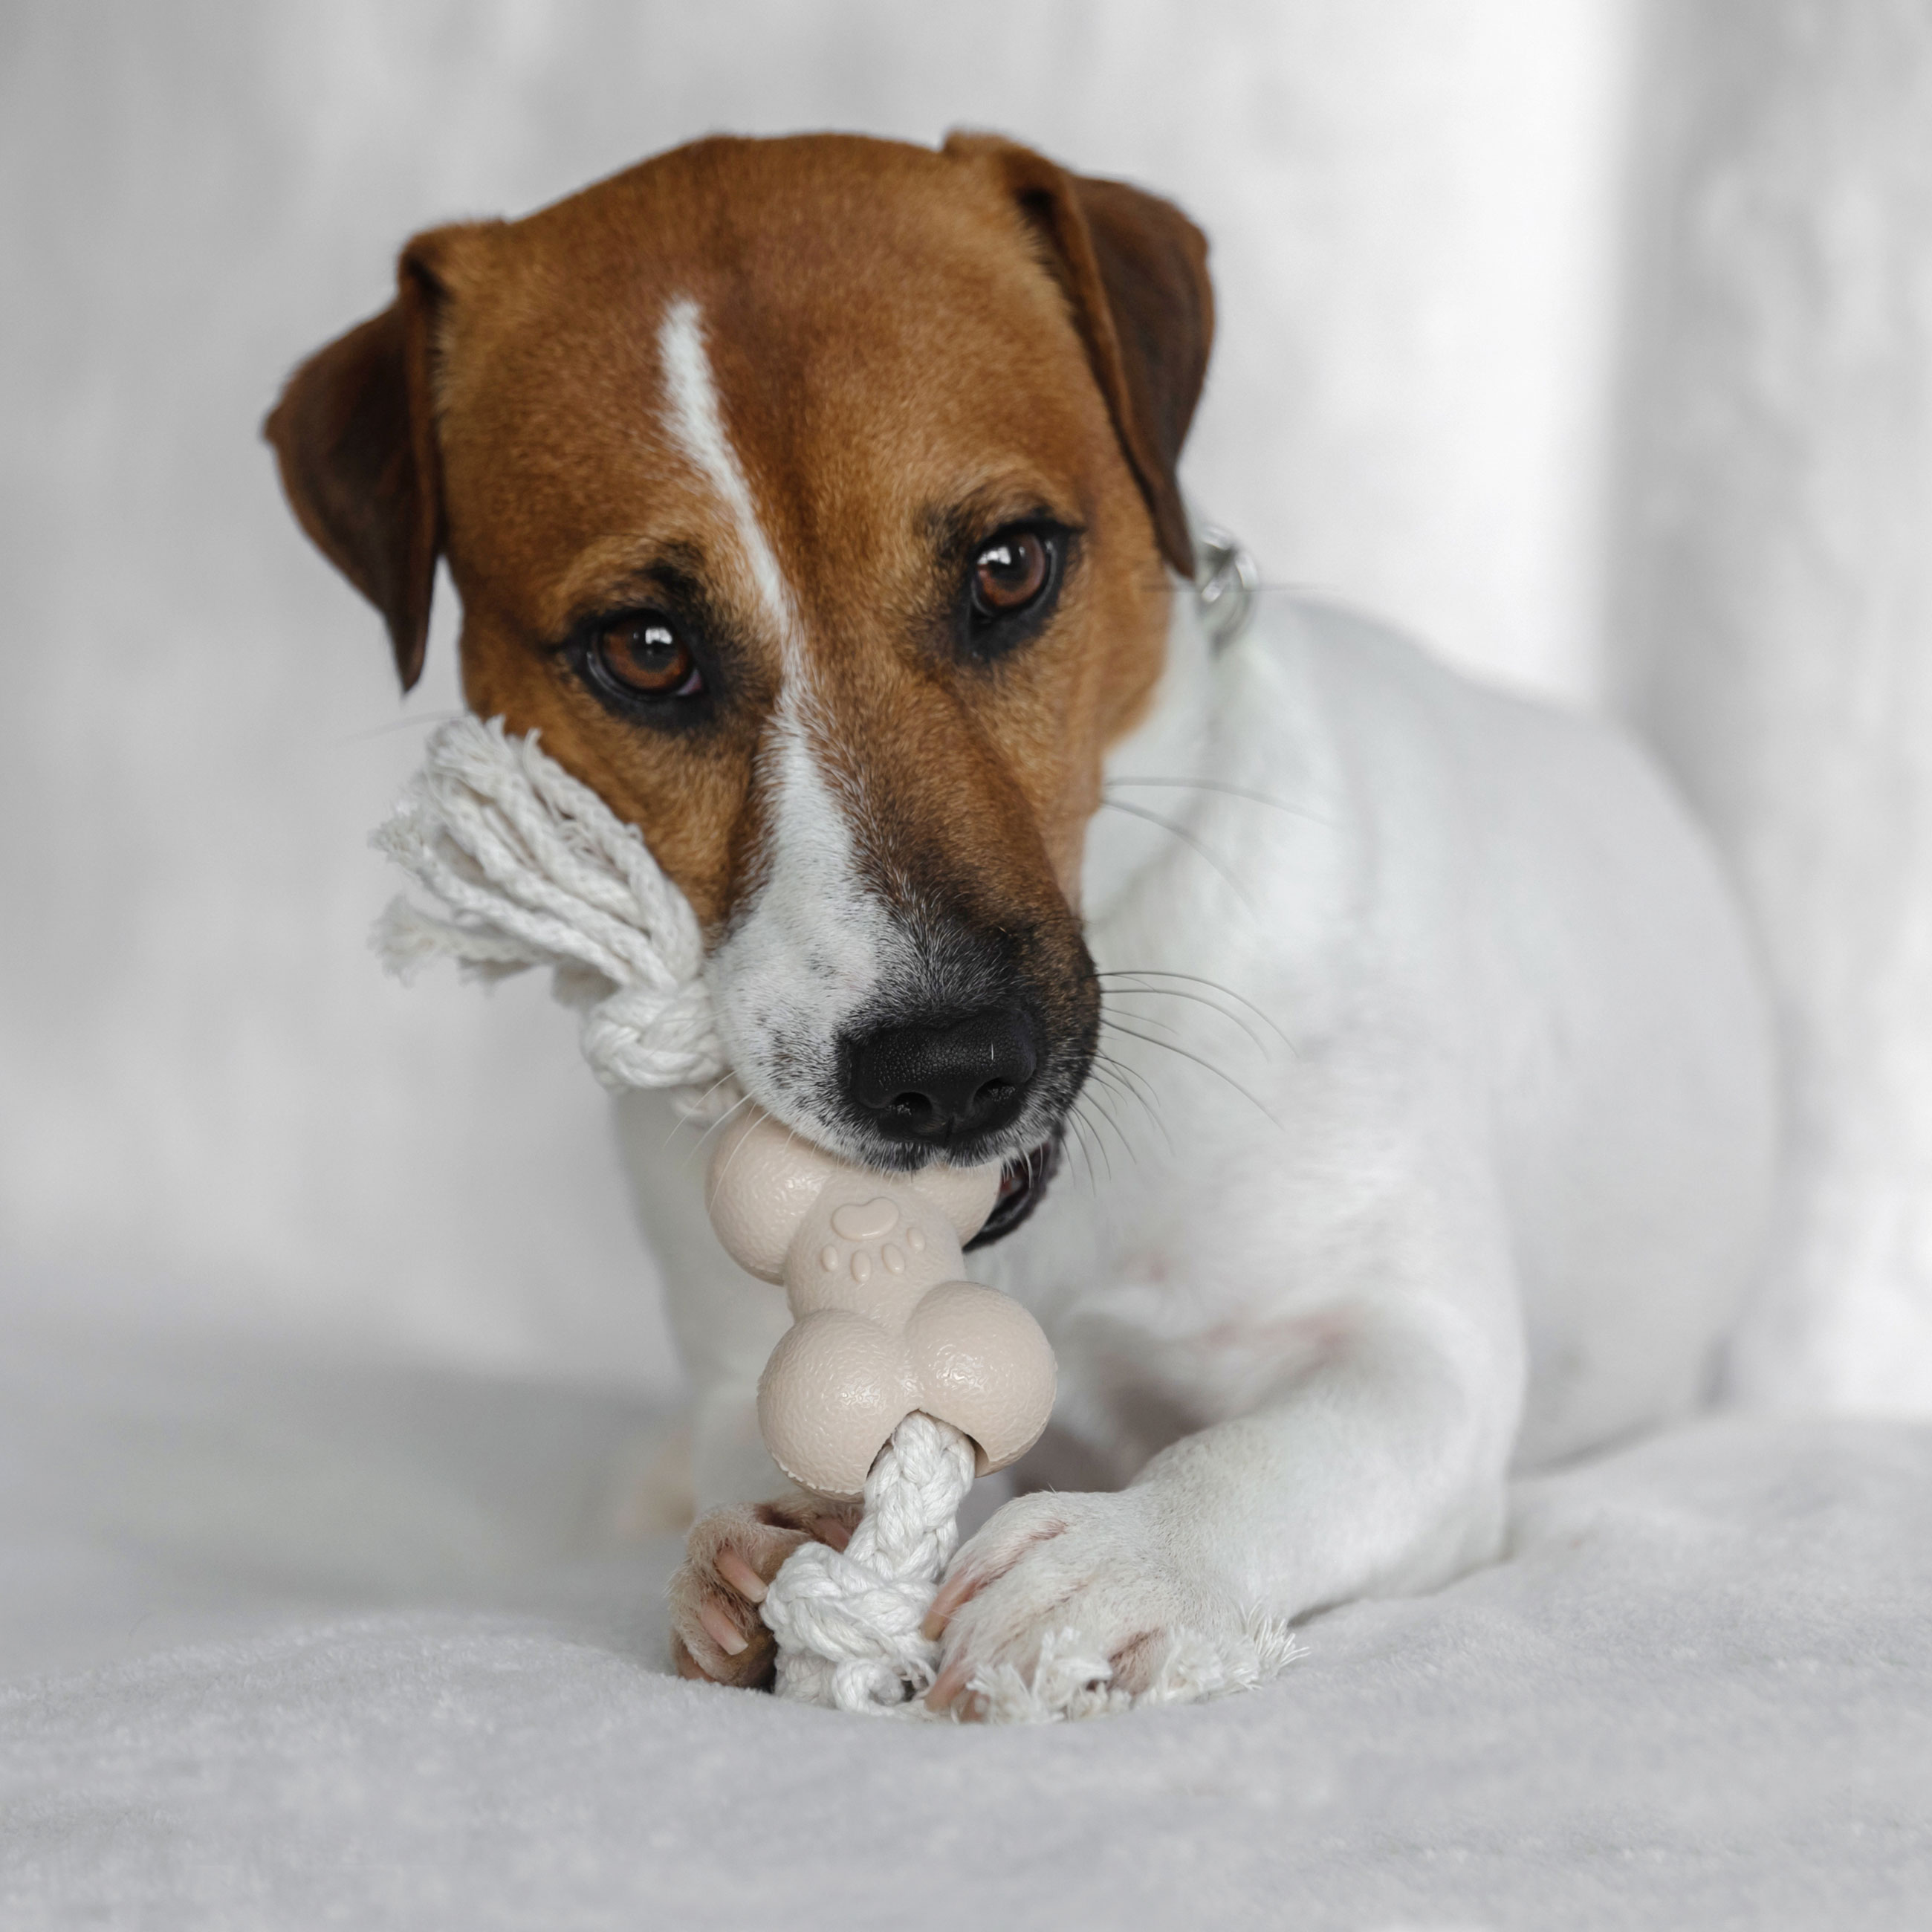 Dog toy, 21 cm, rubber / cotton, Beige, Bone on rope, Playful pet изображение № 2